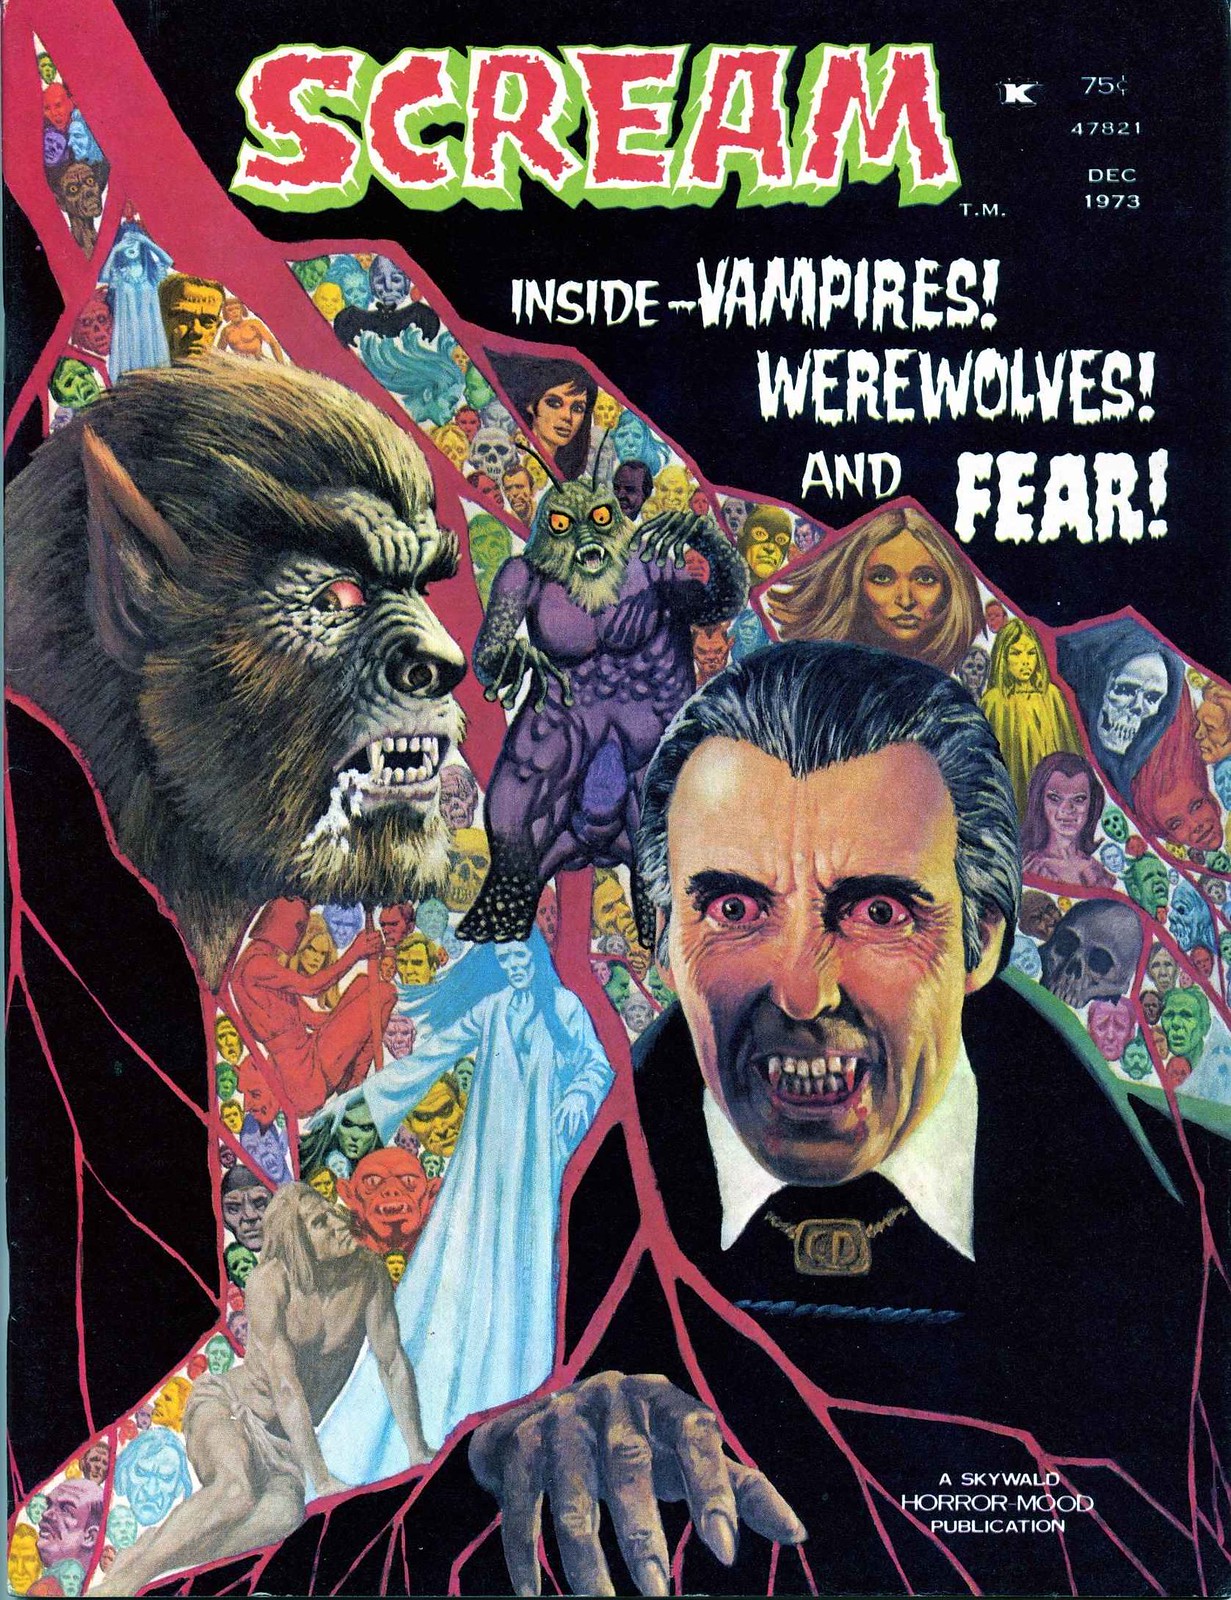 Scream Magazine, Issue 03, December 1973